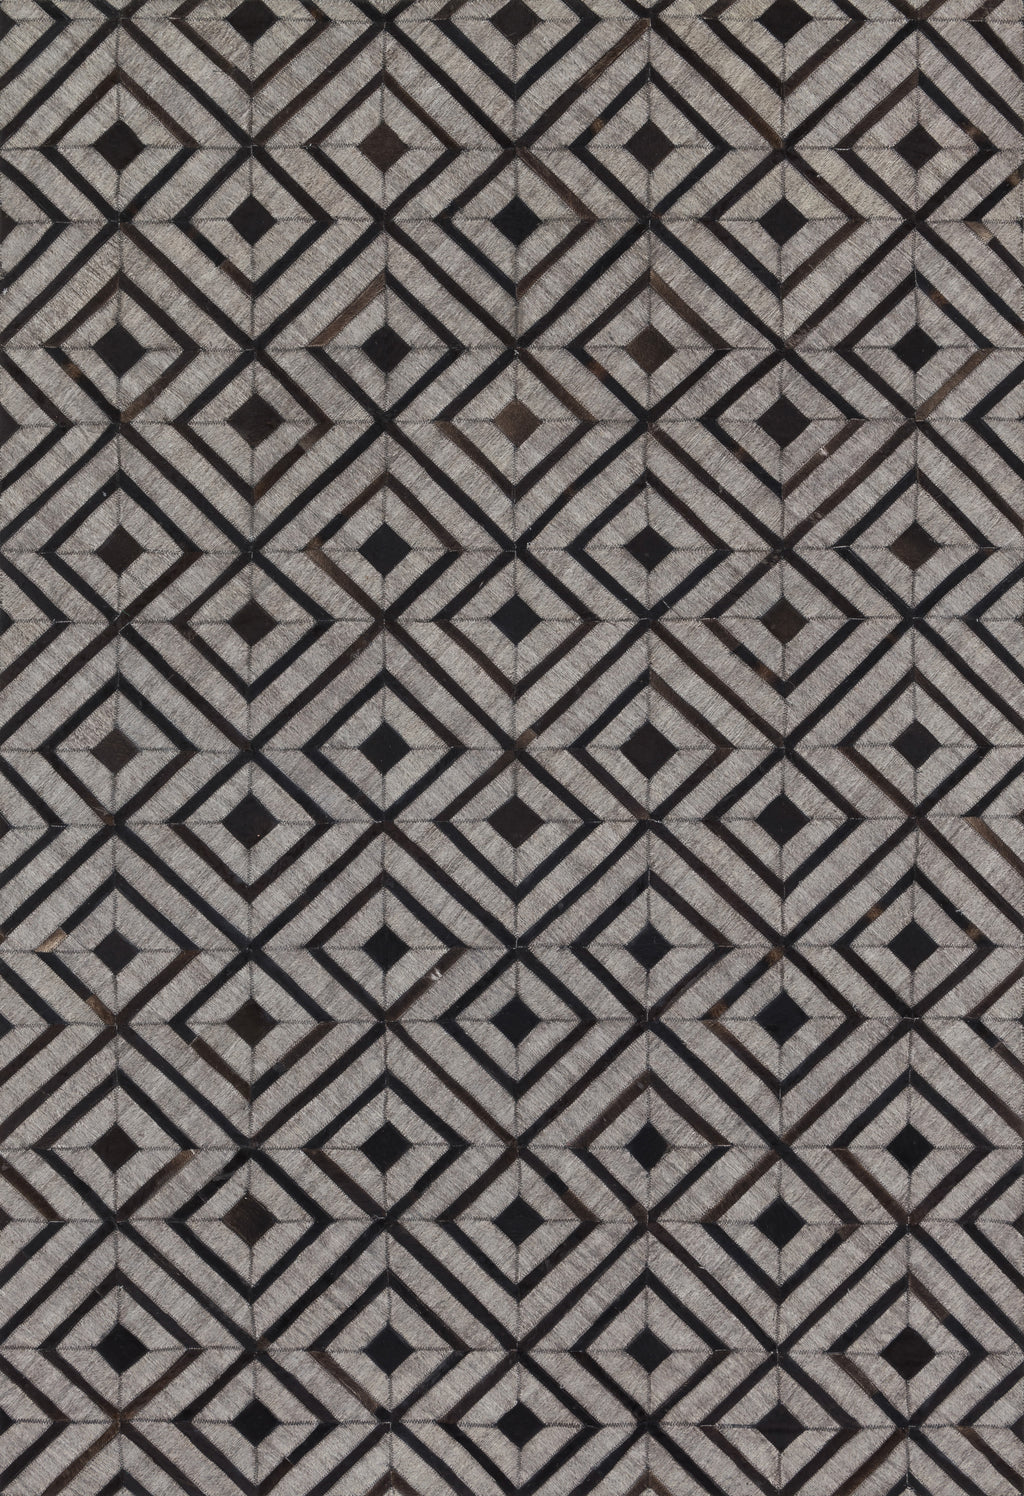 DORADO Collection Wool/Viscose Rug  in  BEIGE / EXPRESSO Beige Runner Hand-Loomed Wool/Viscose